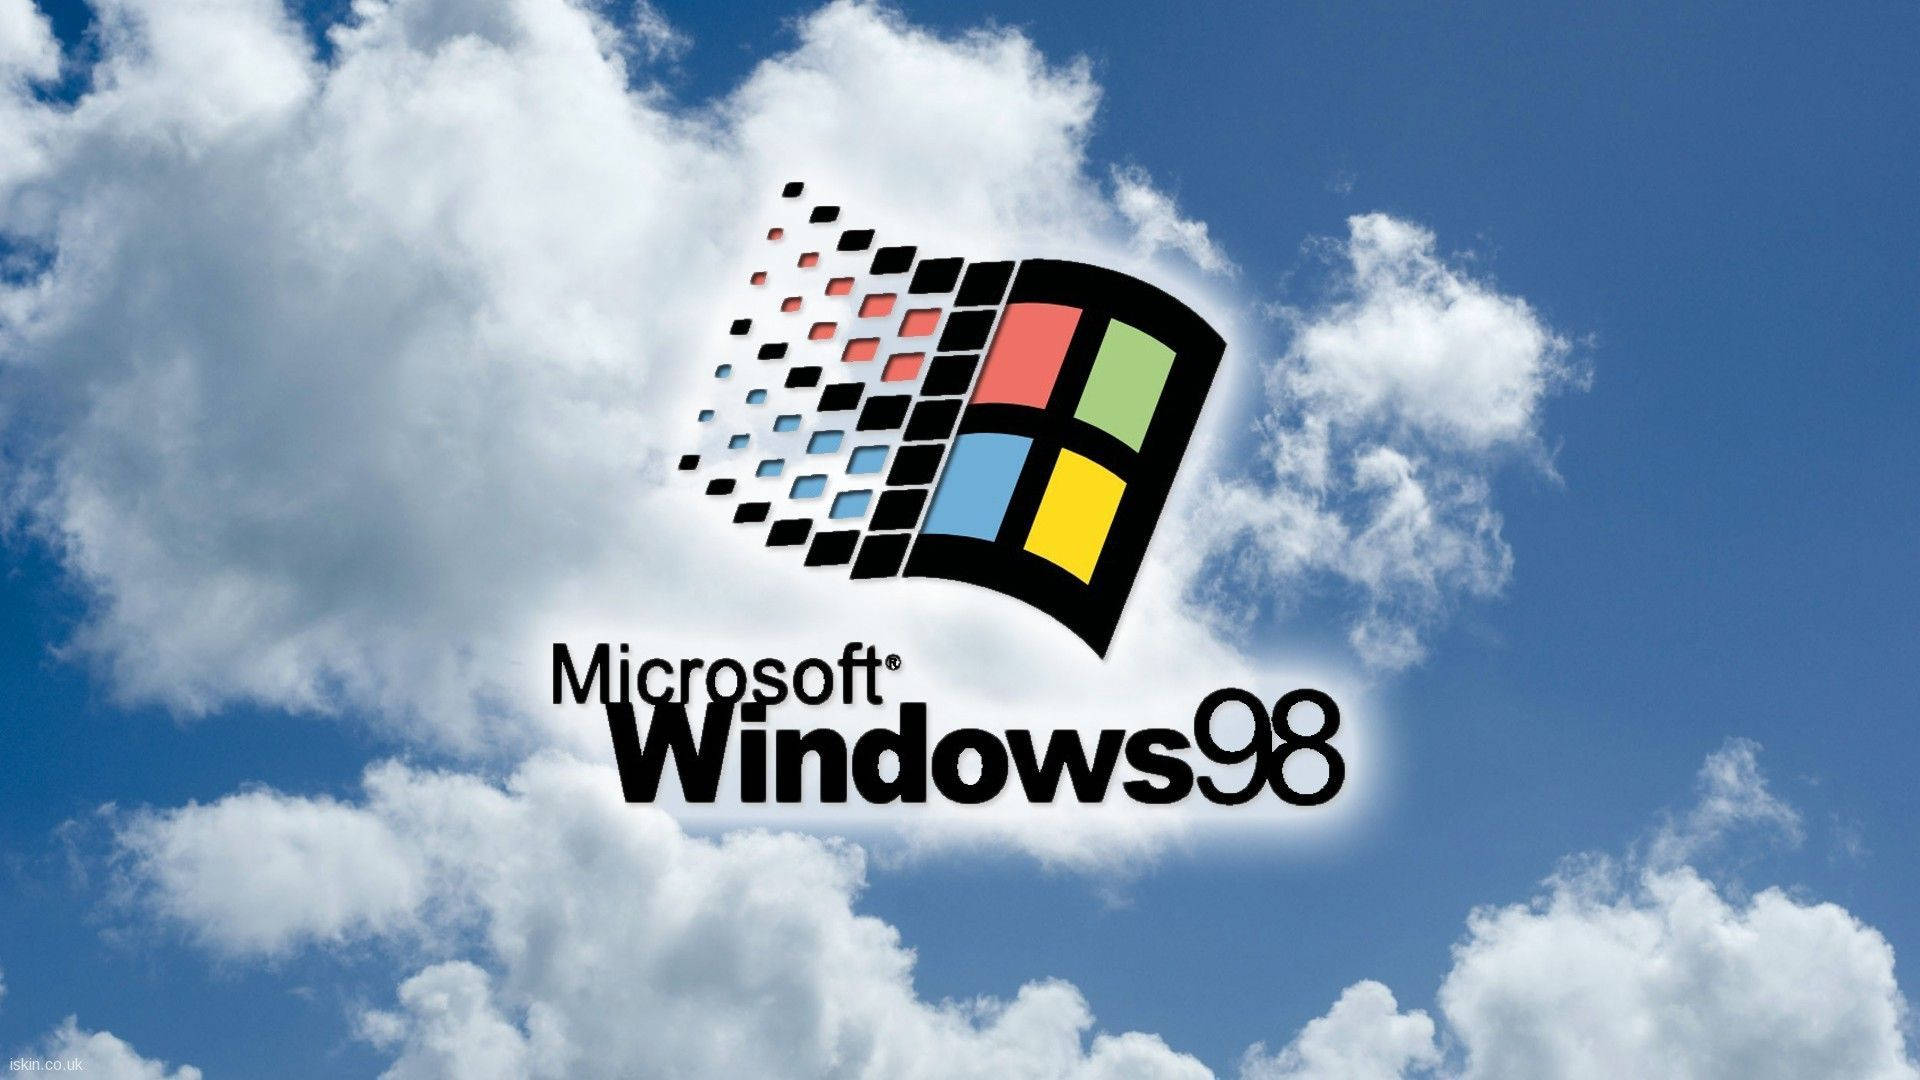 Windows 98 Pictures Wallpaper